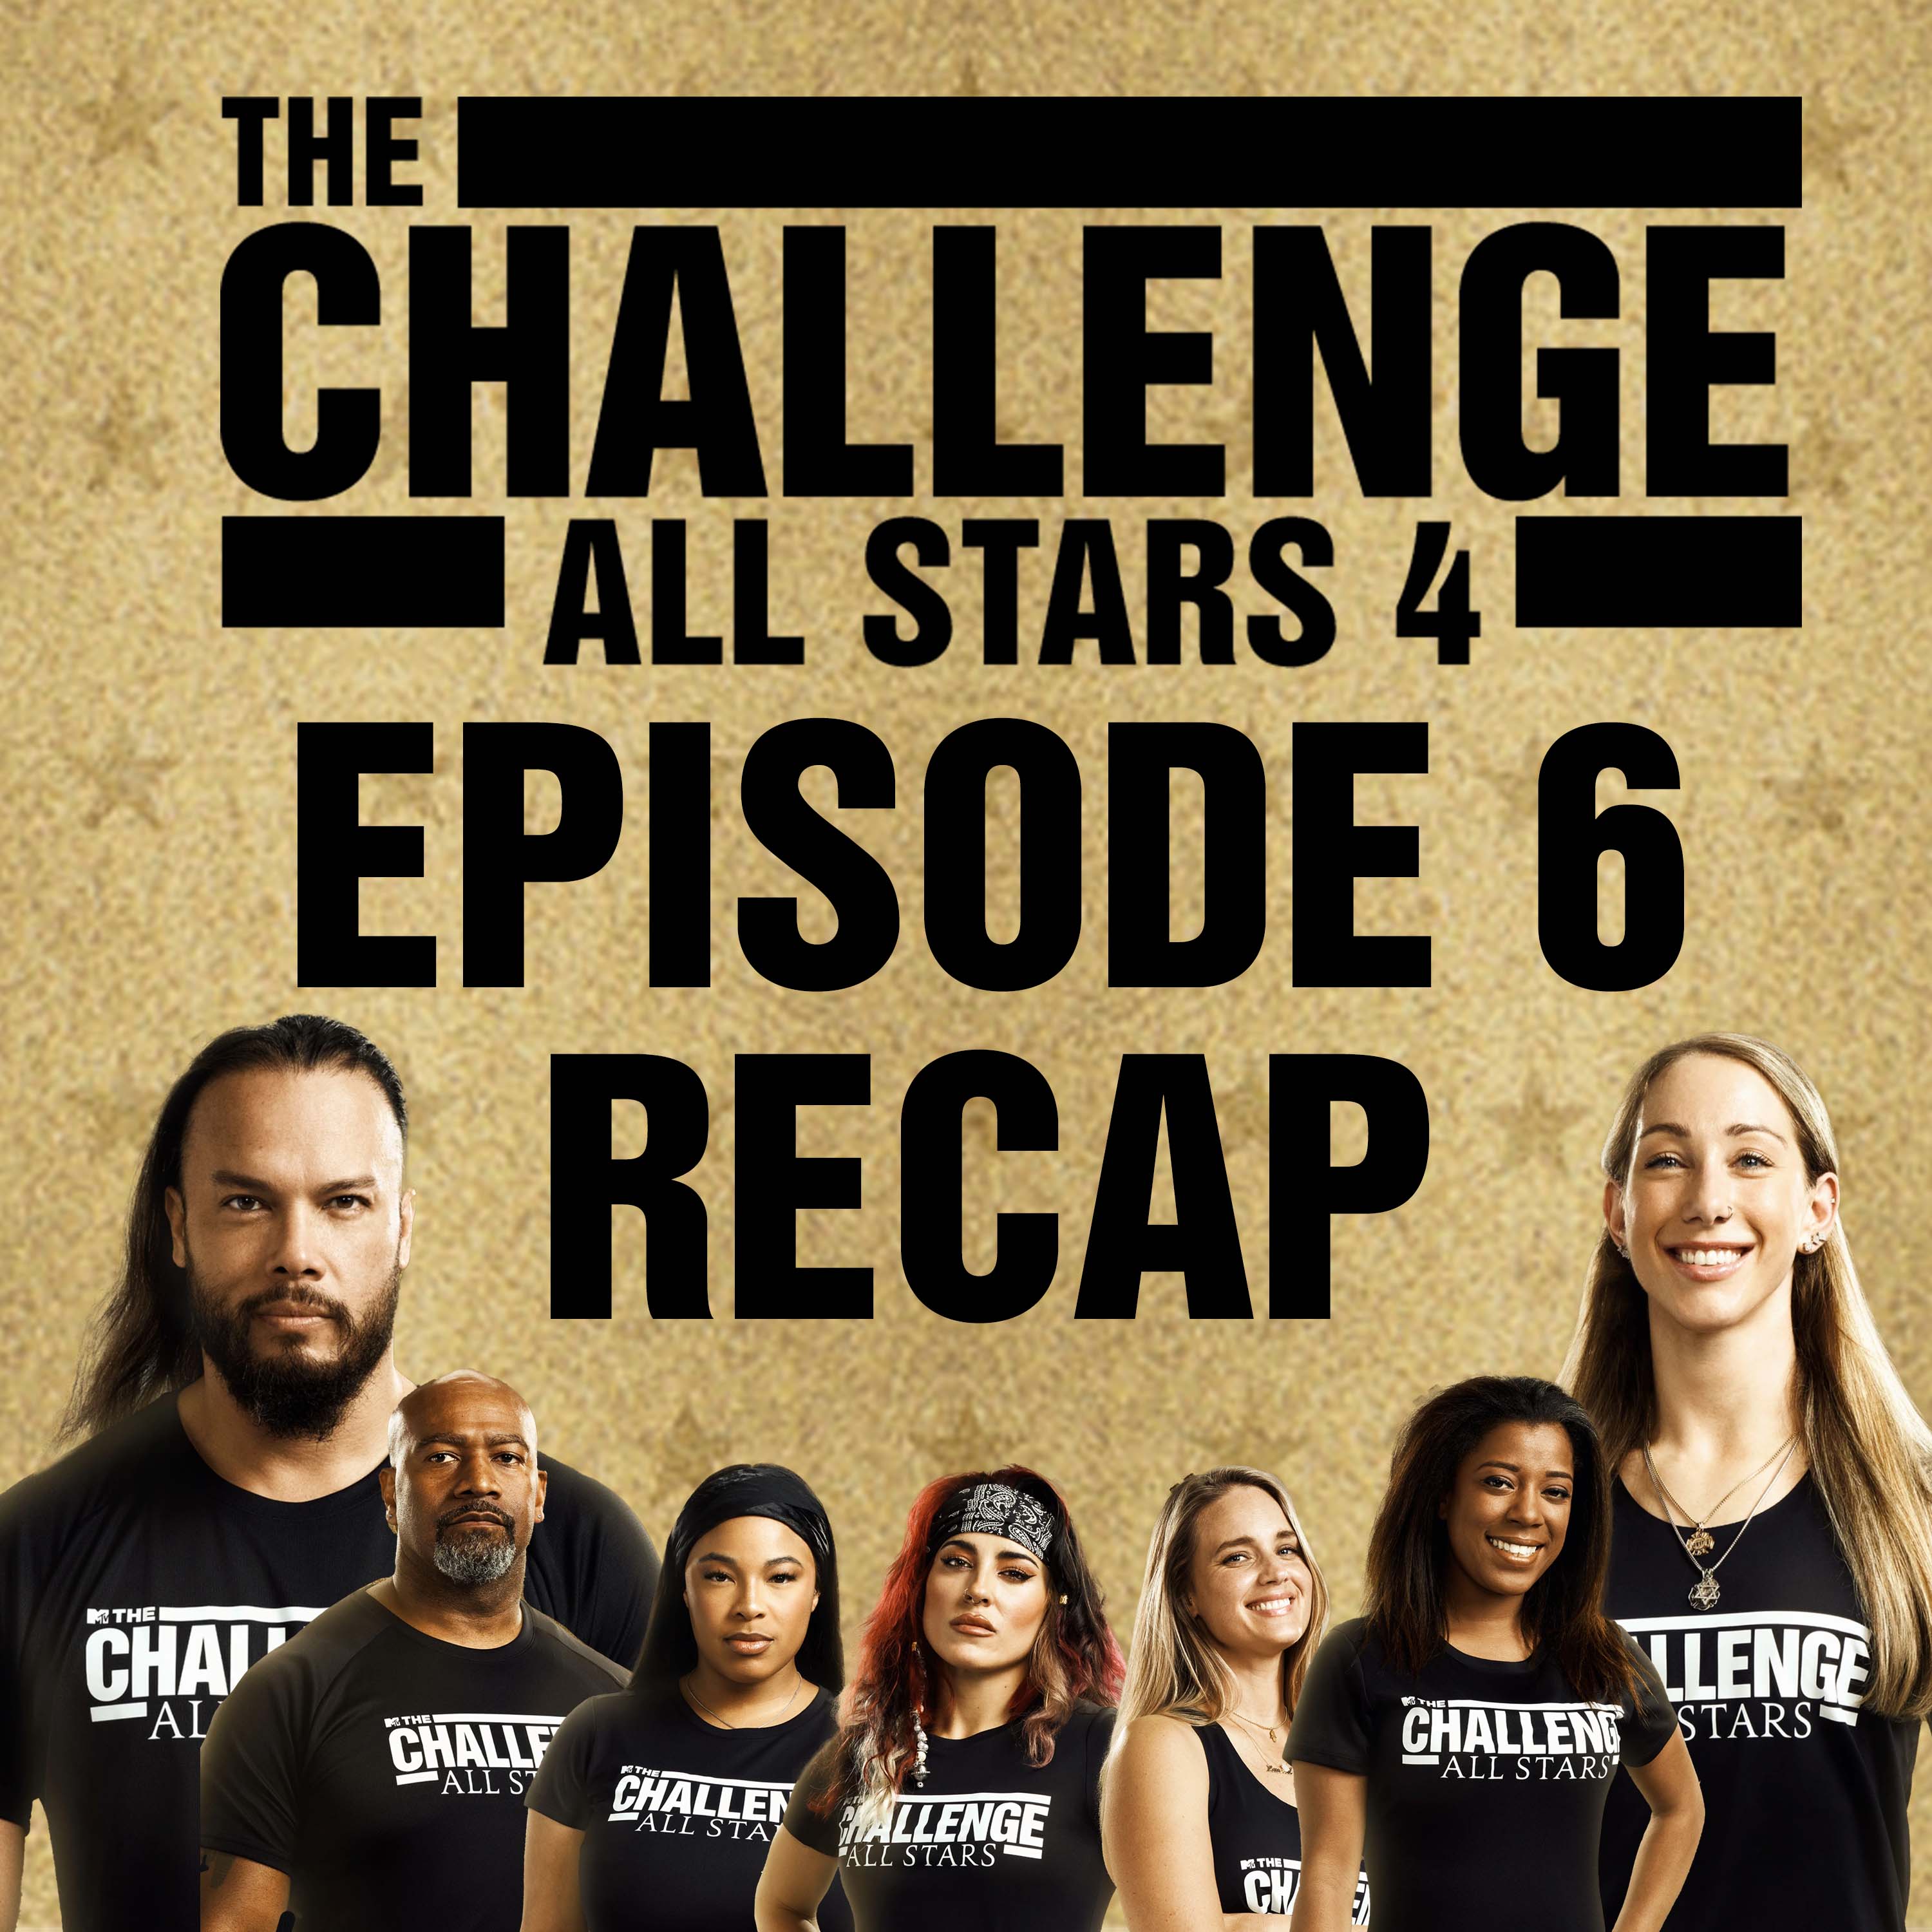 All Stars 4 Episode 6 Recap